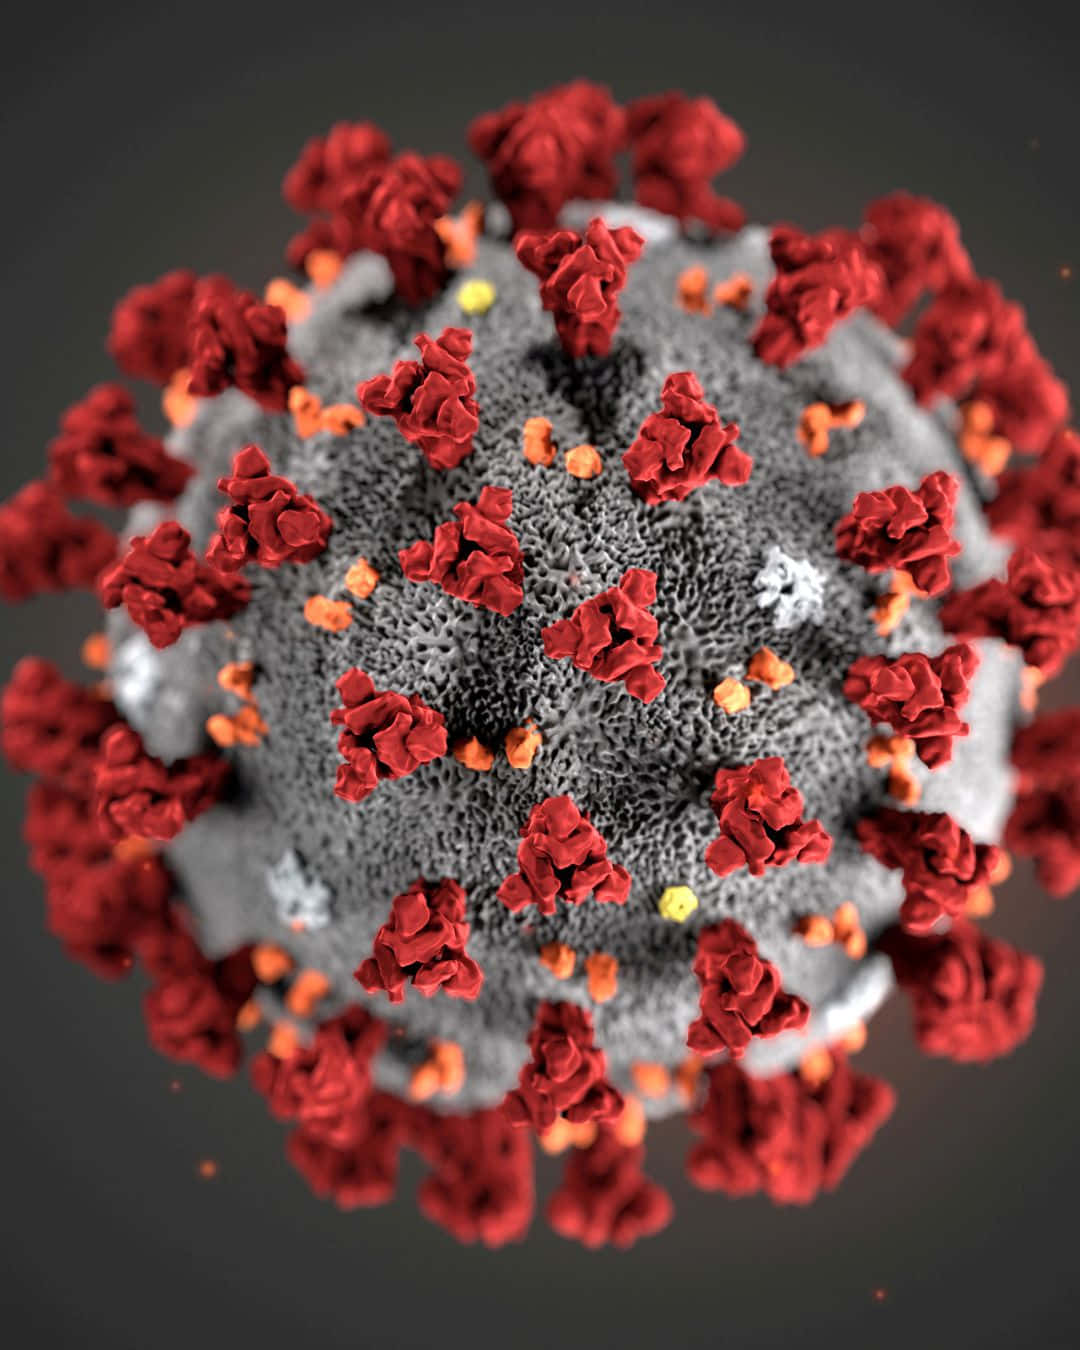 Coronavirus Virus In A Red And Black Background